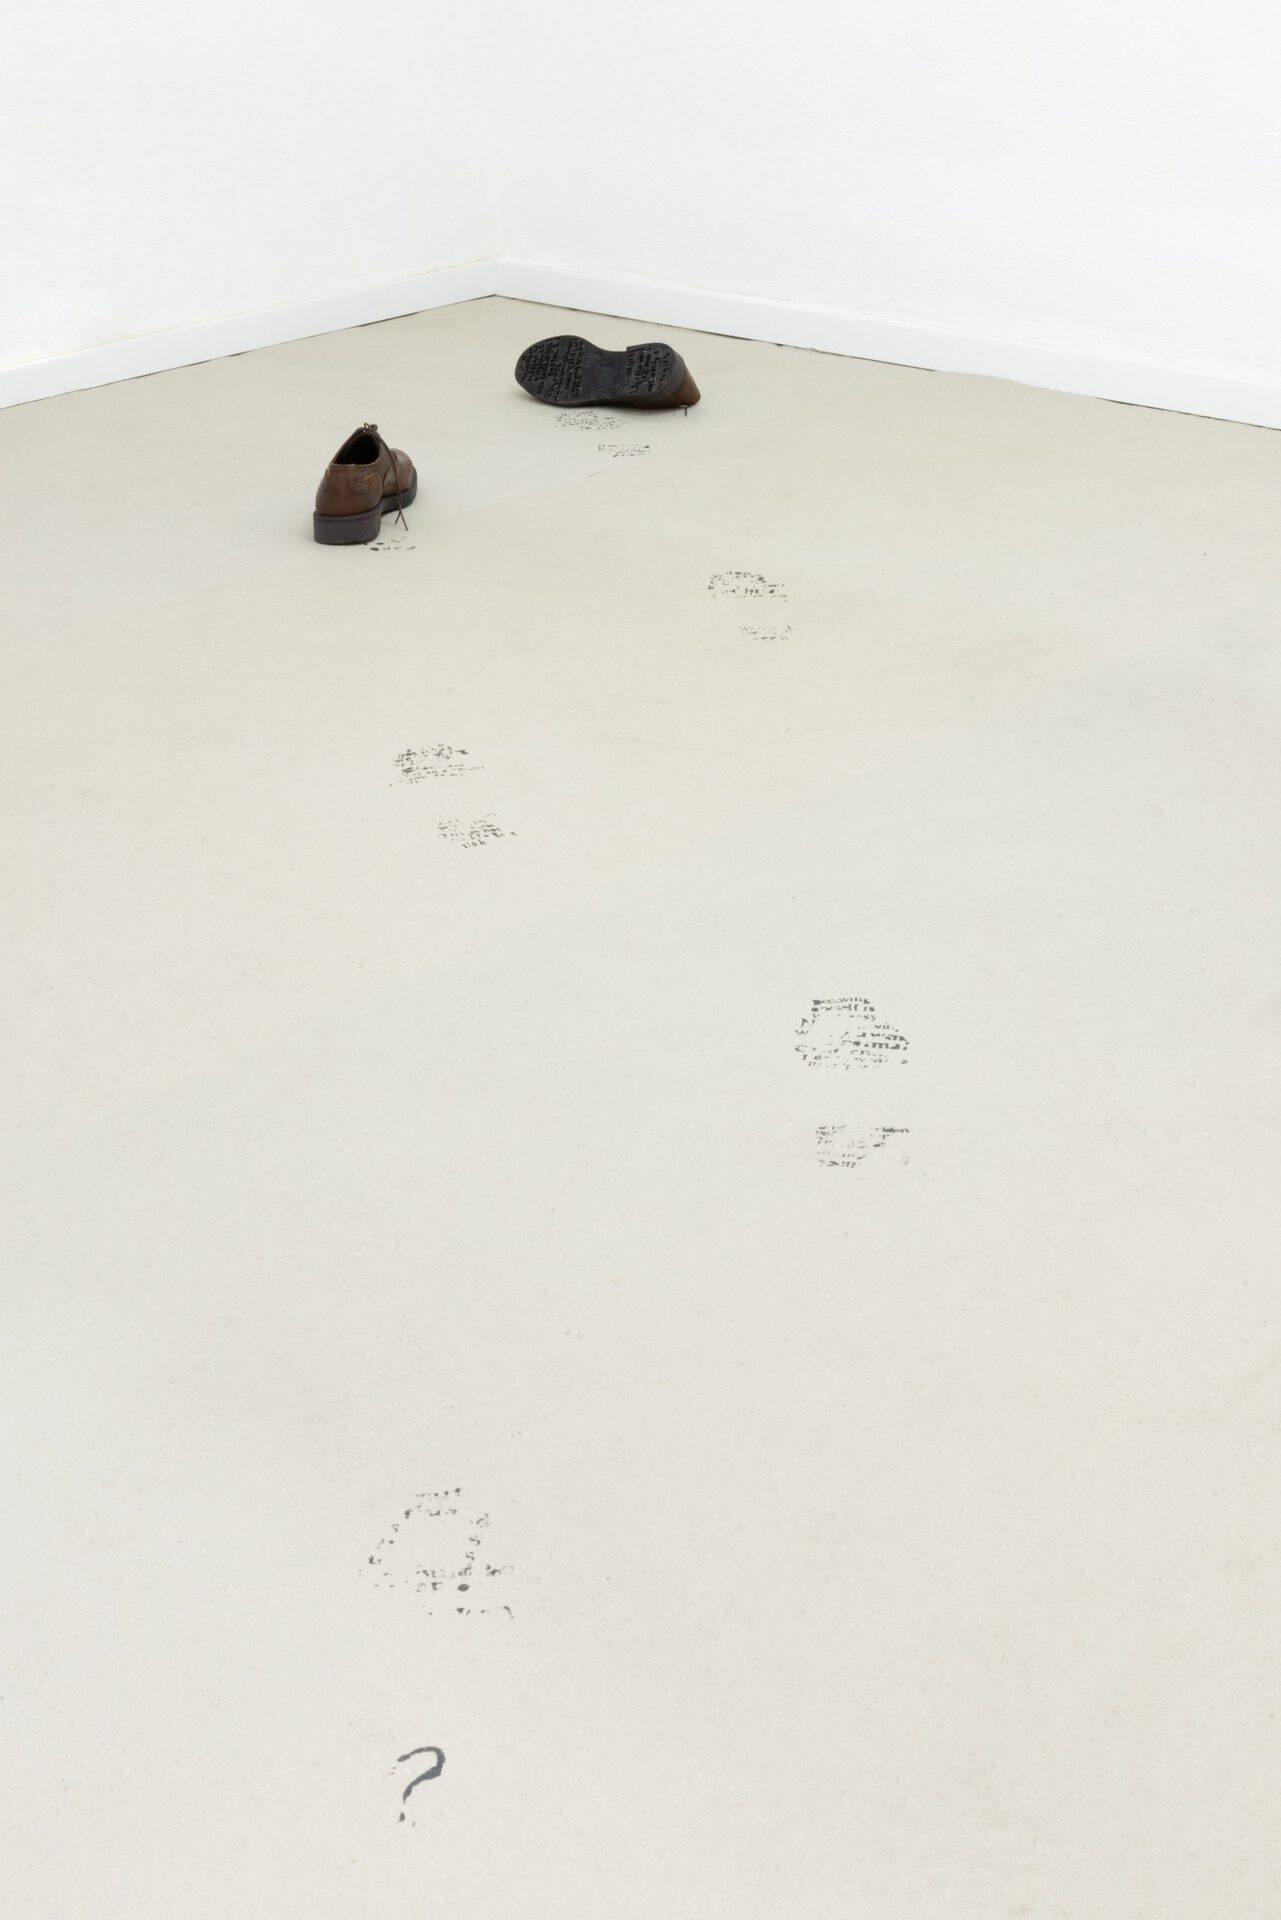 Francesco De Bernardi , installation view, “Stroll”, Four pairs of shoes, wood, black paint, 2022